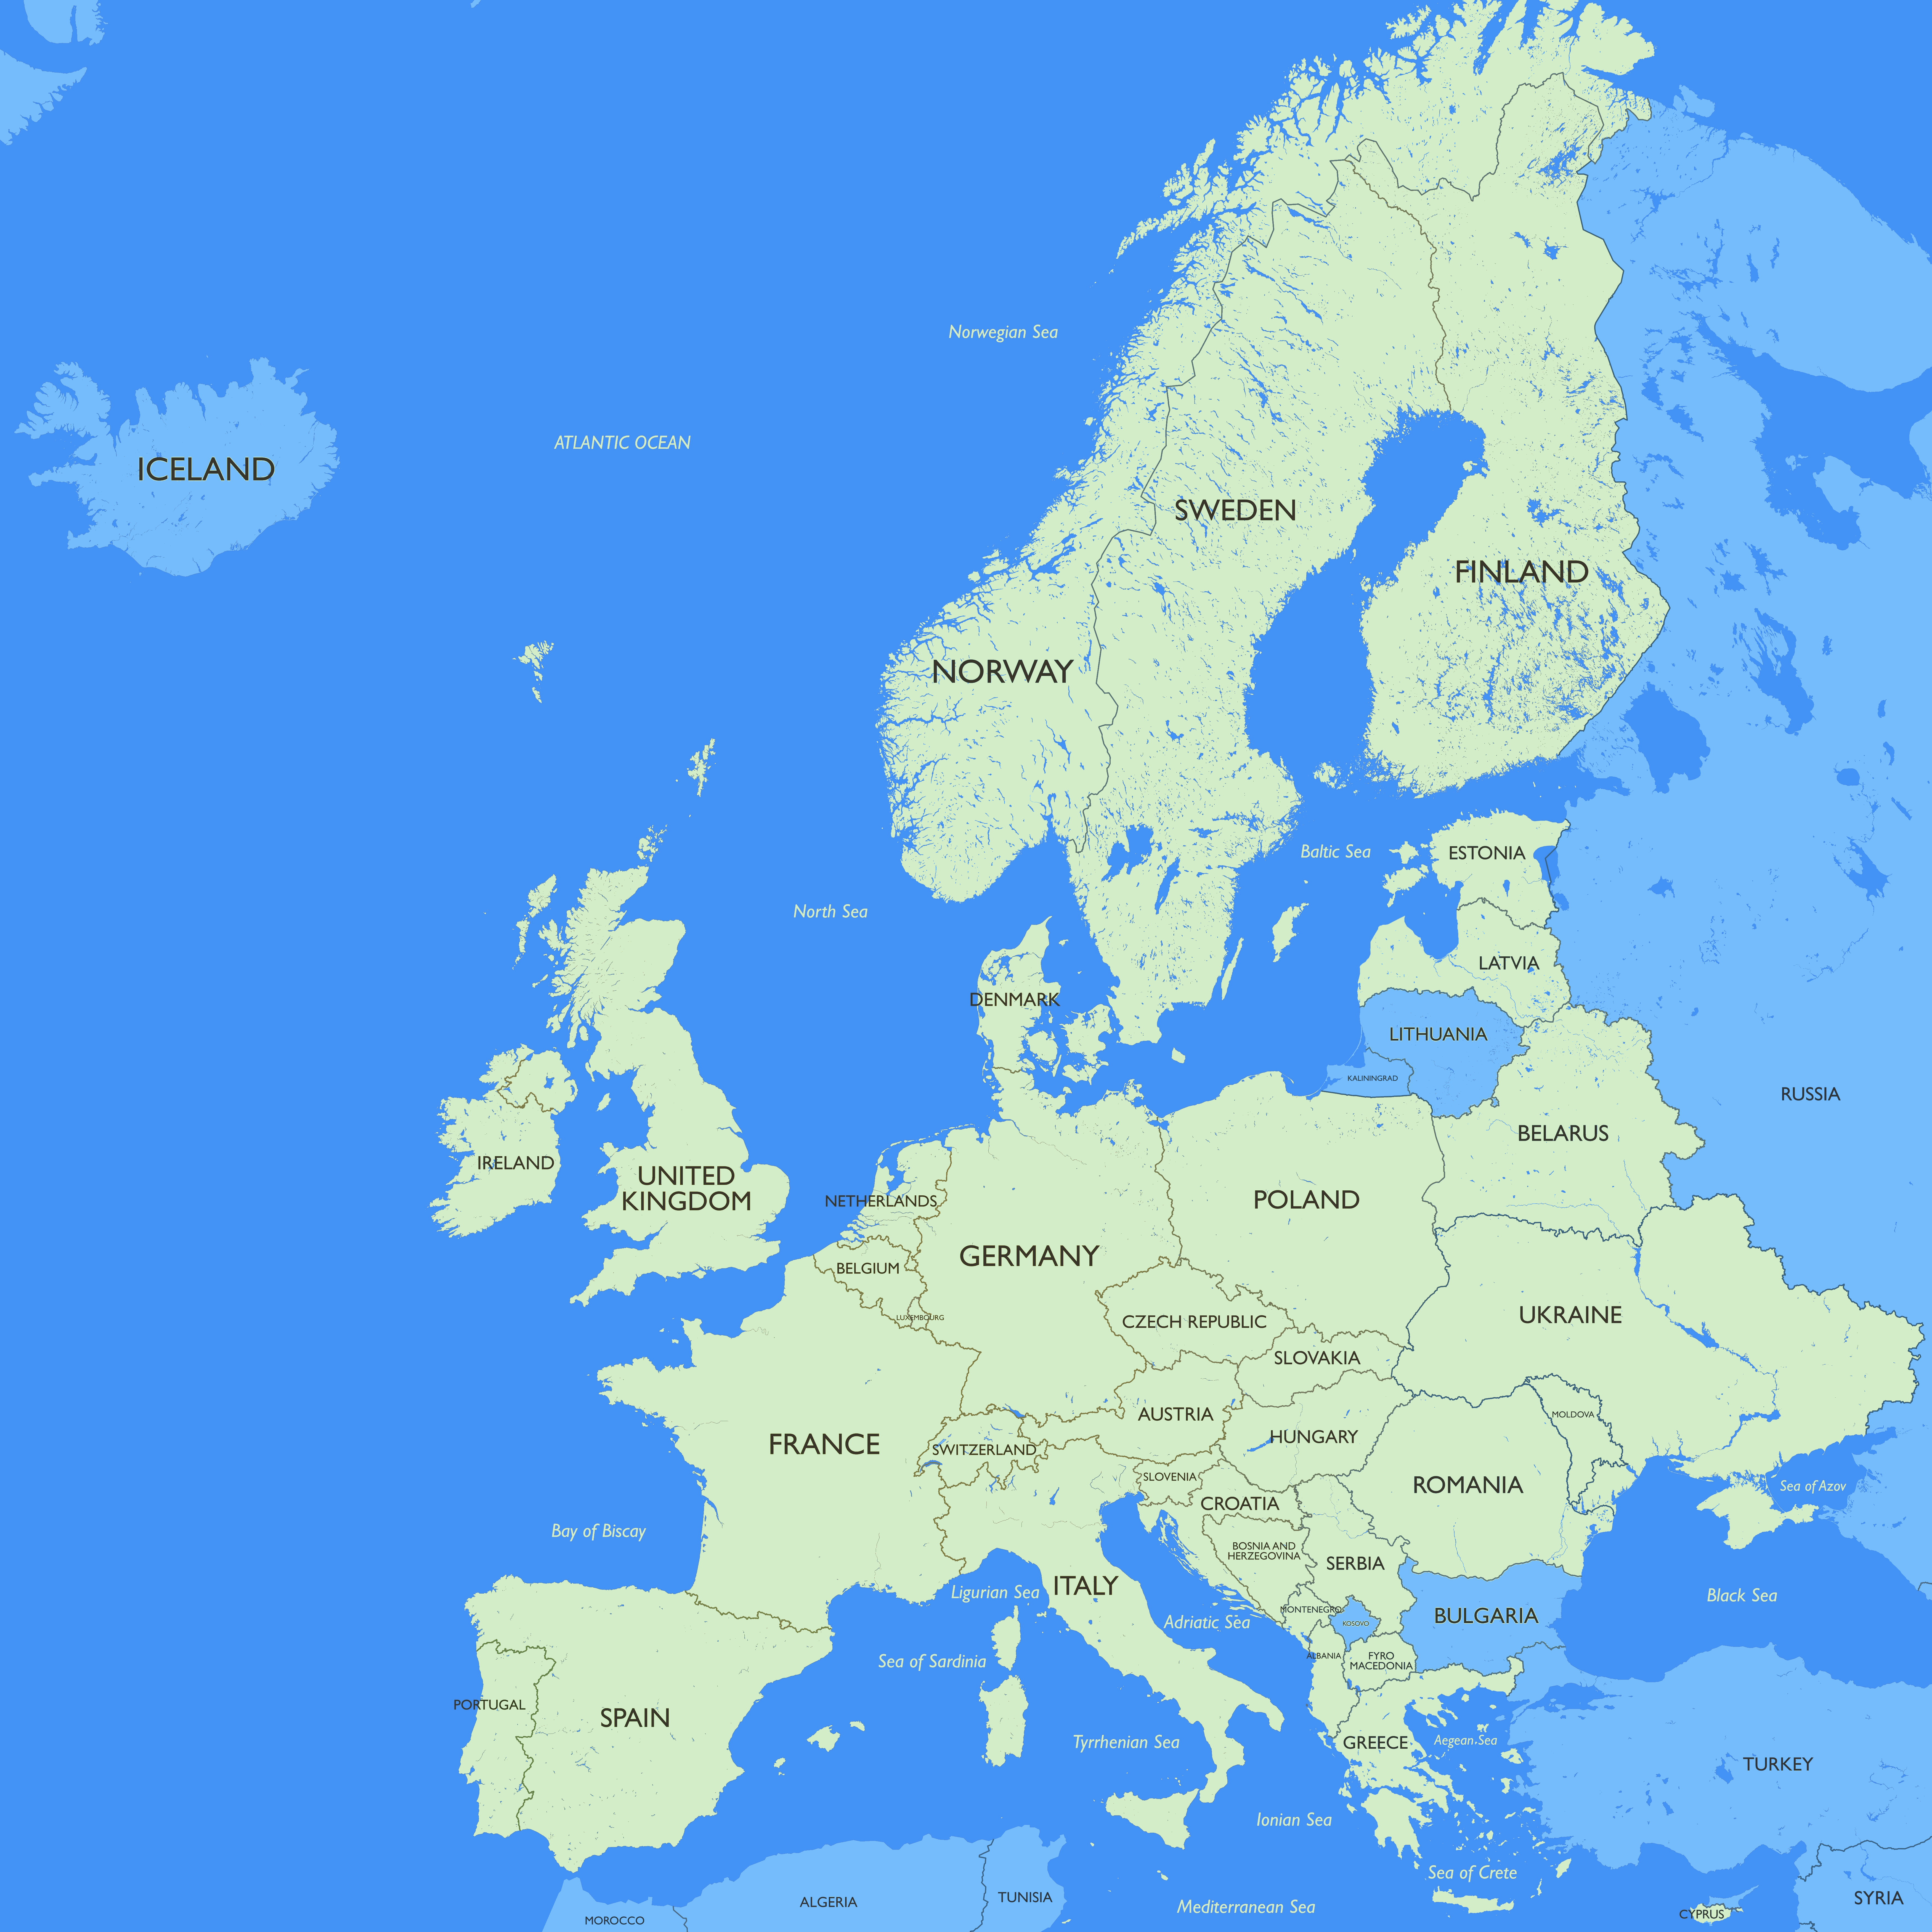 European Union Members Map